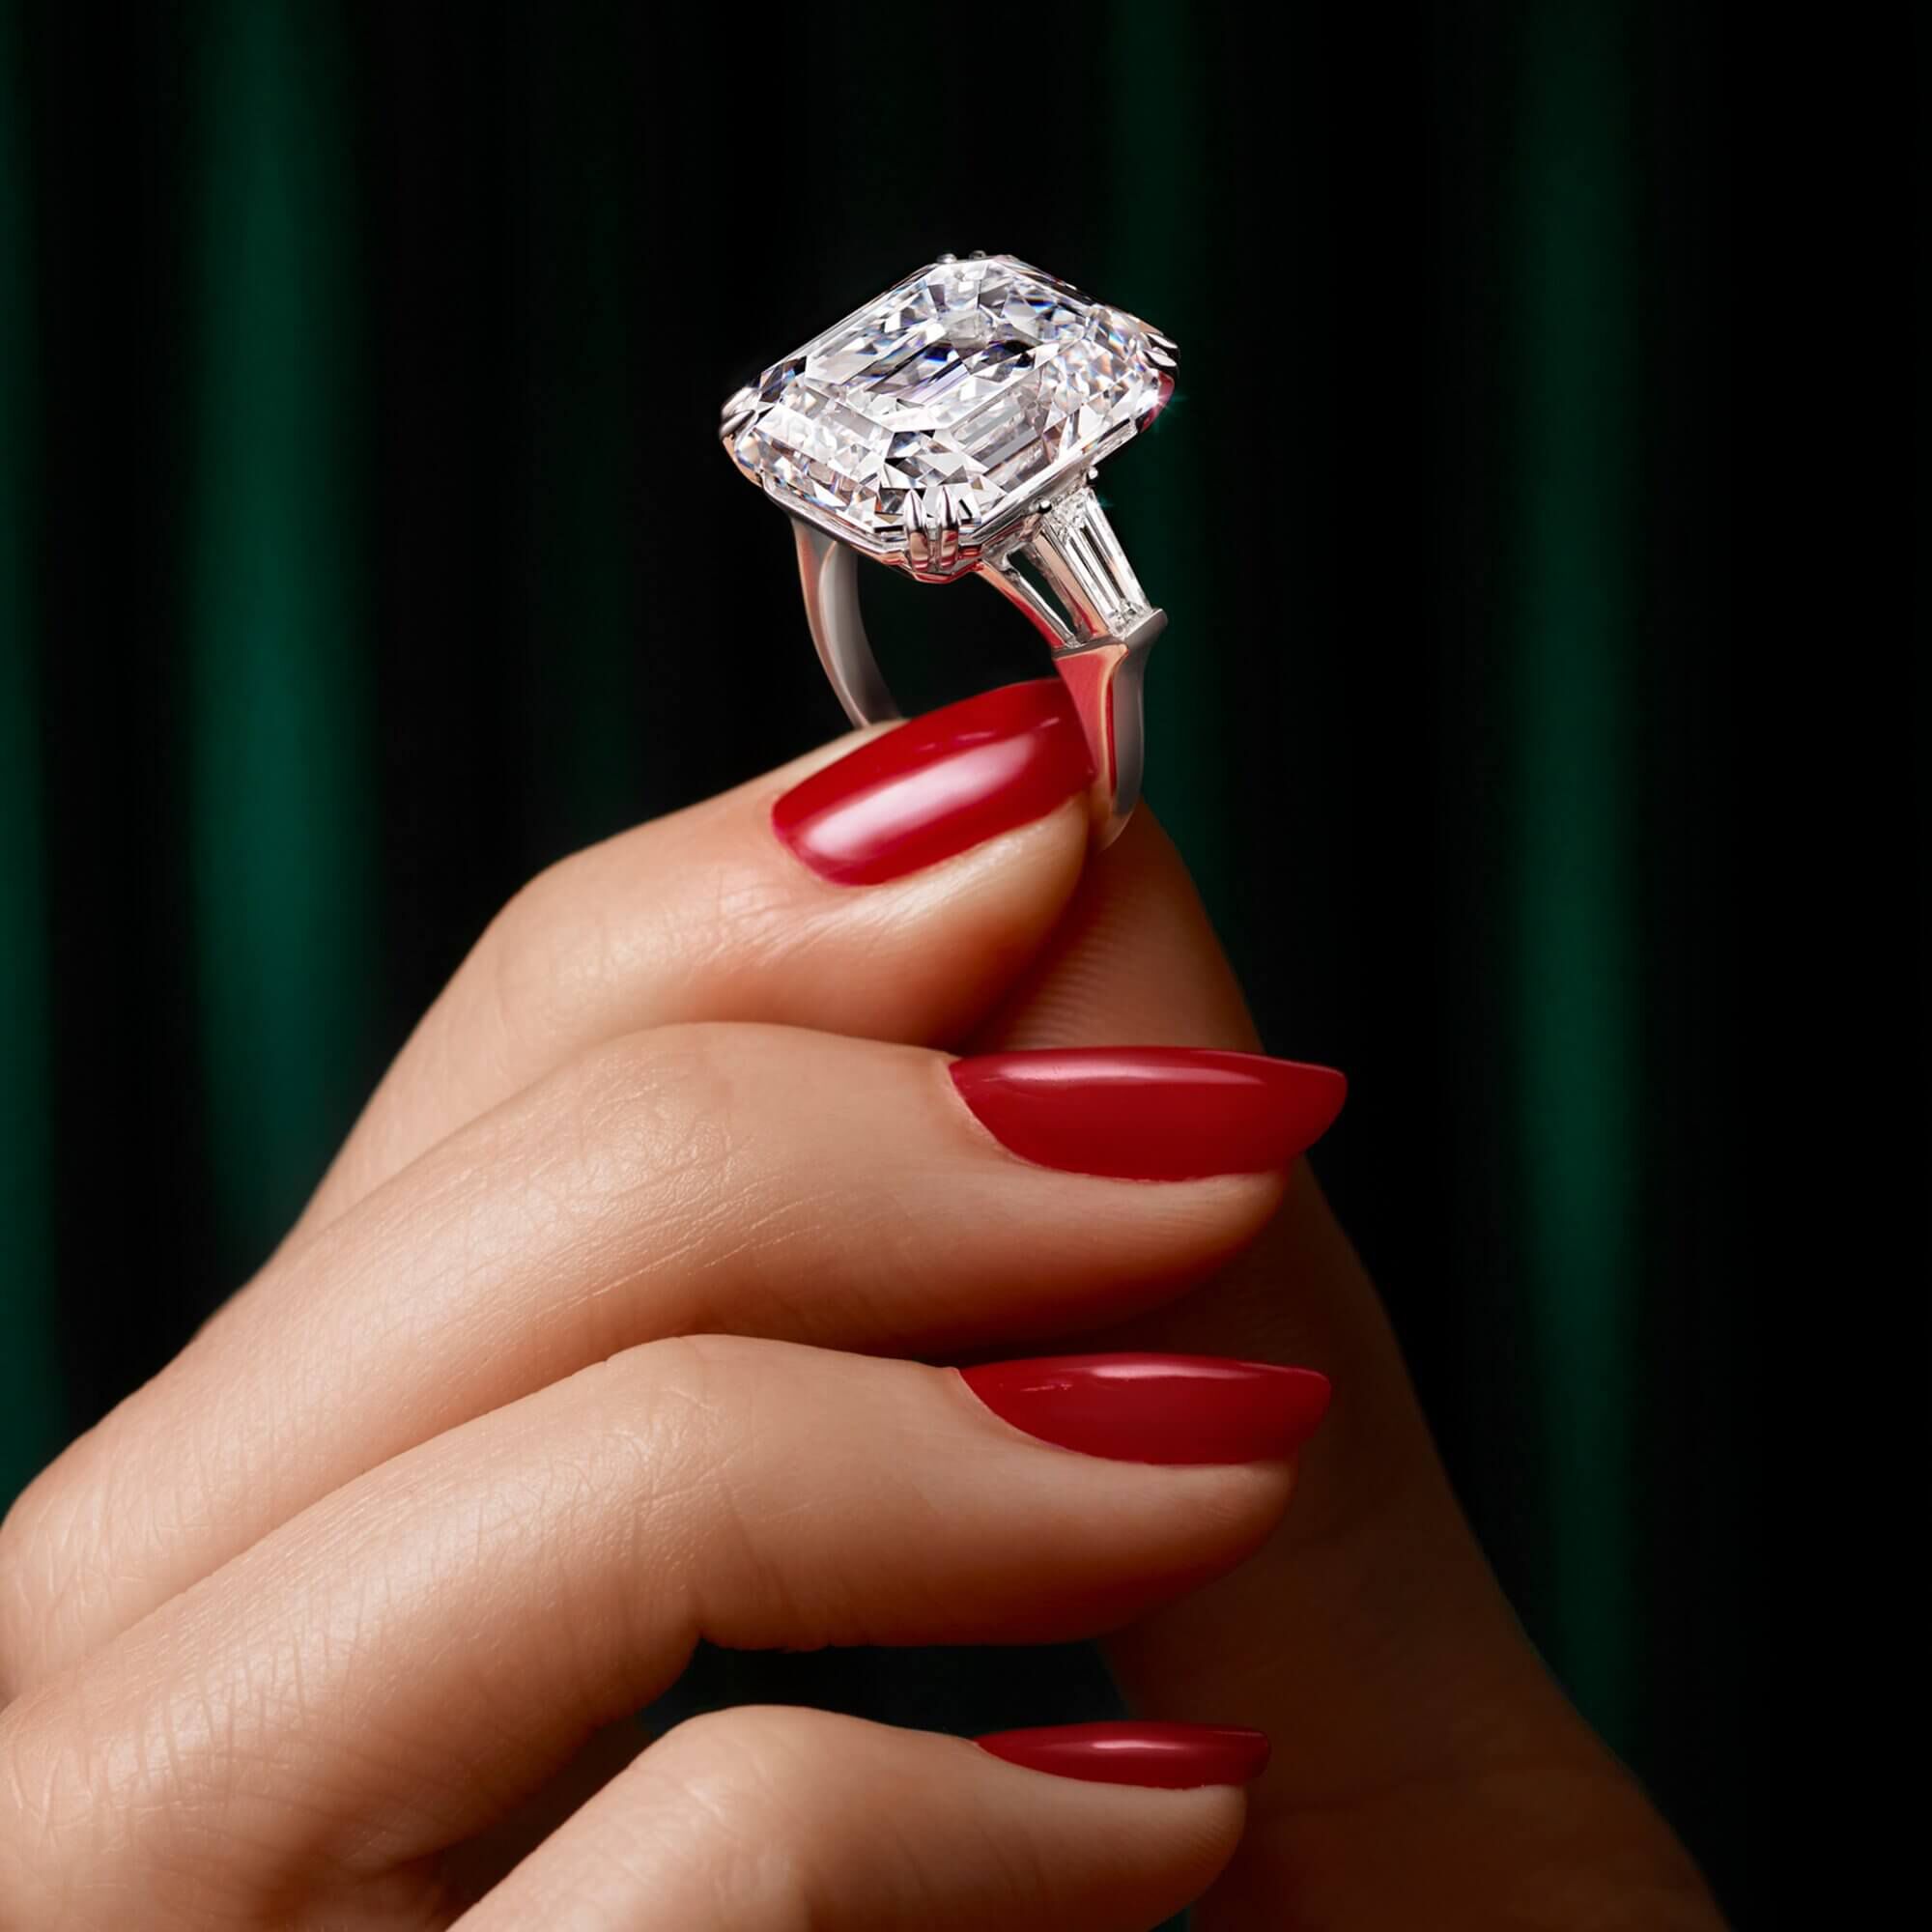 Model holding a emerald cut diamond ring